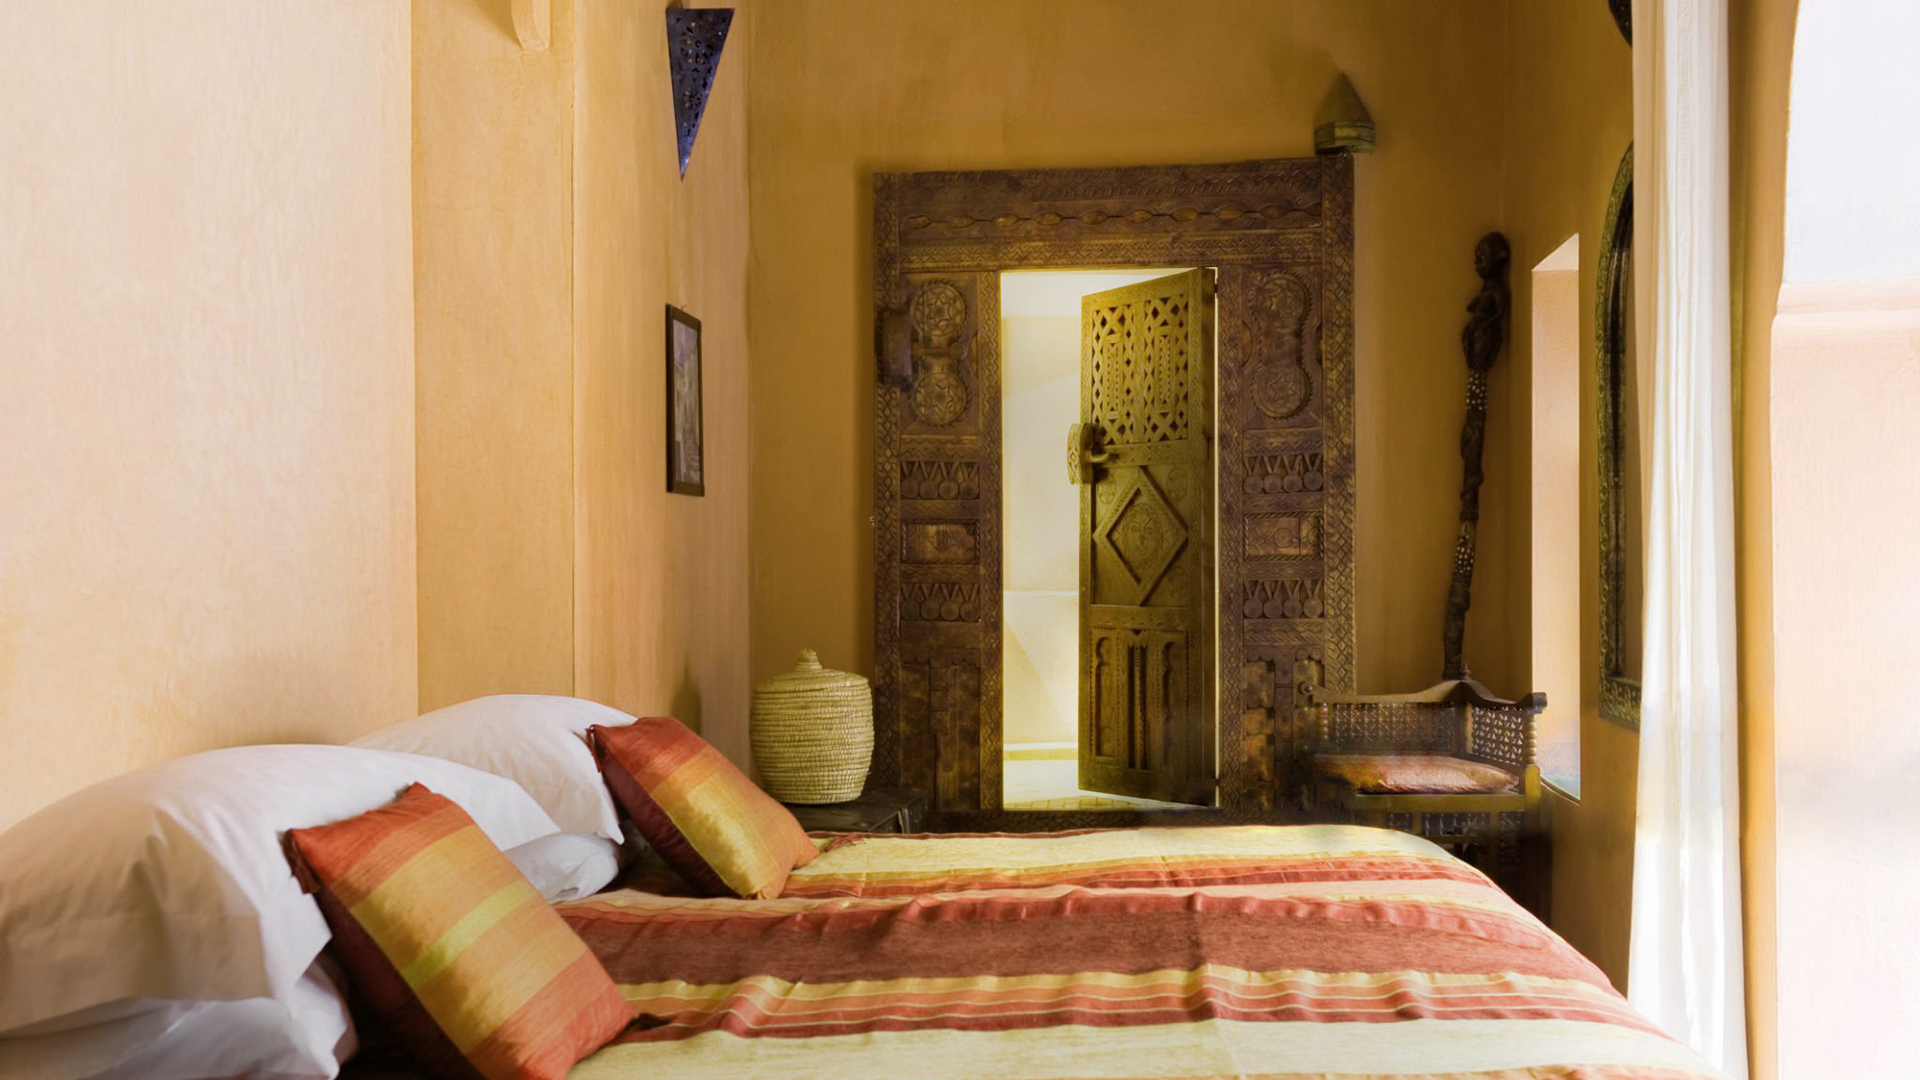 Arab-style bedroom with tadelakt on walls